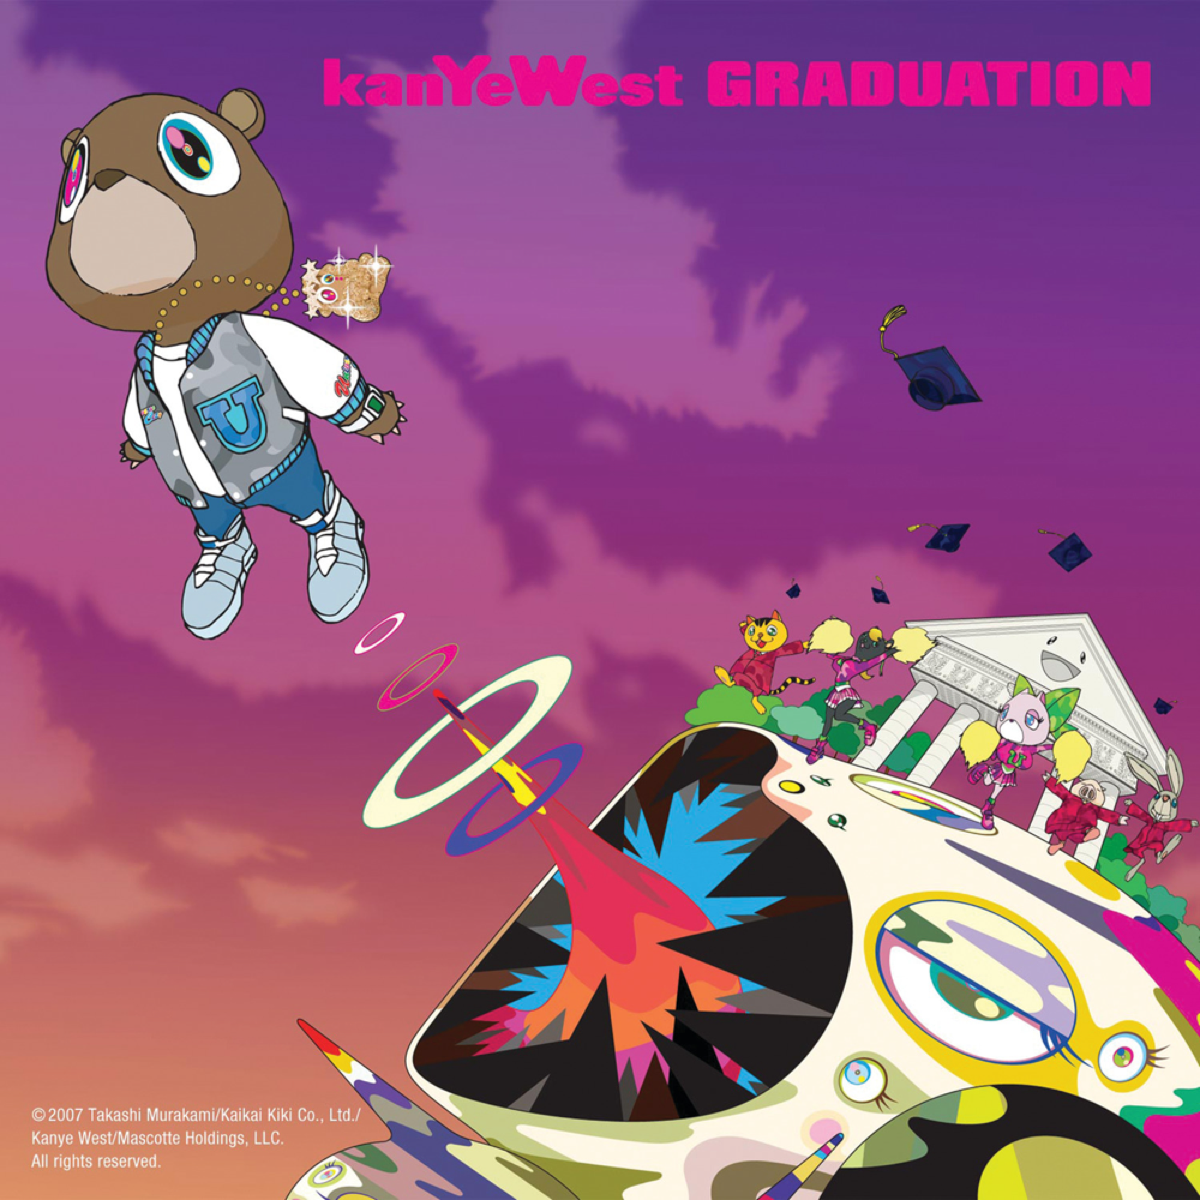 Album art for "Graduation" by Kanye West